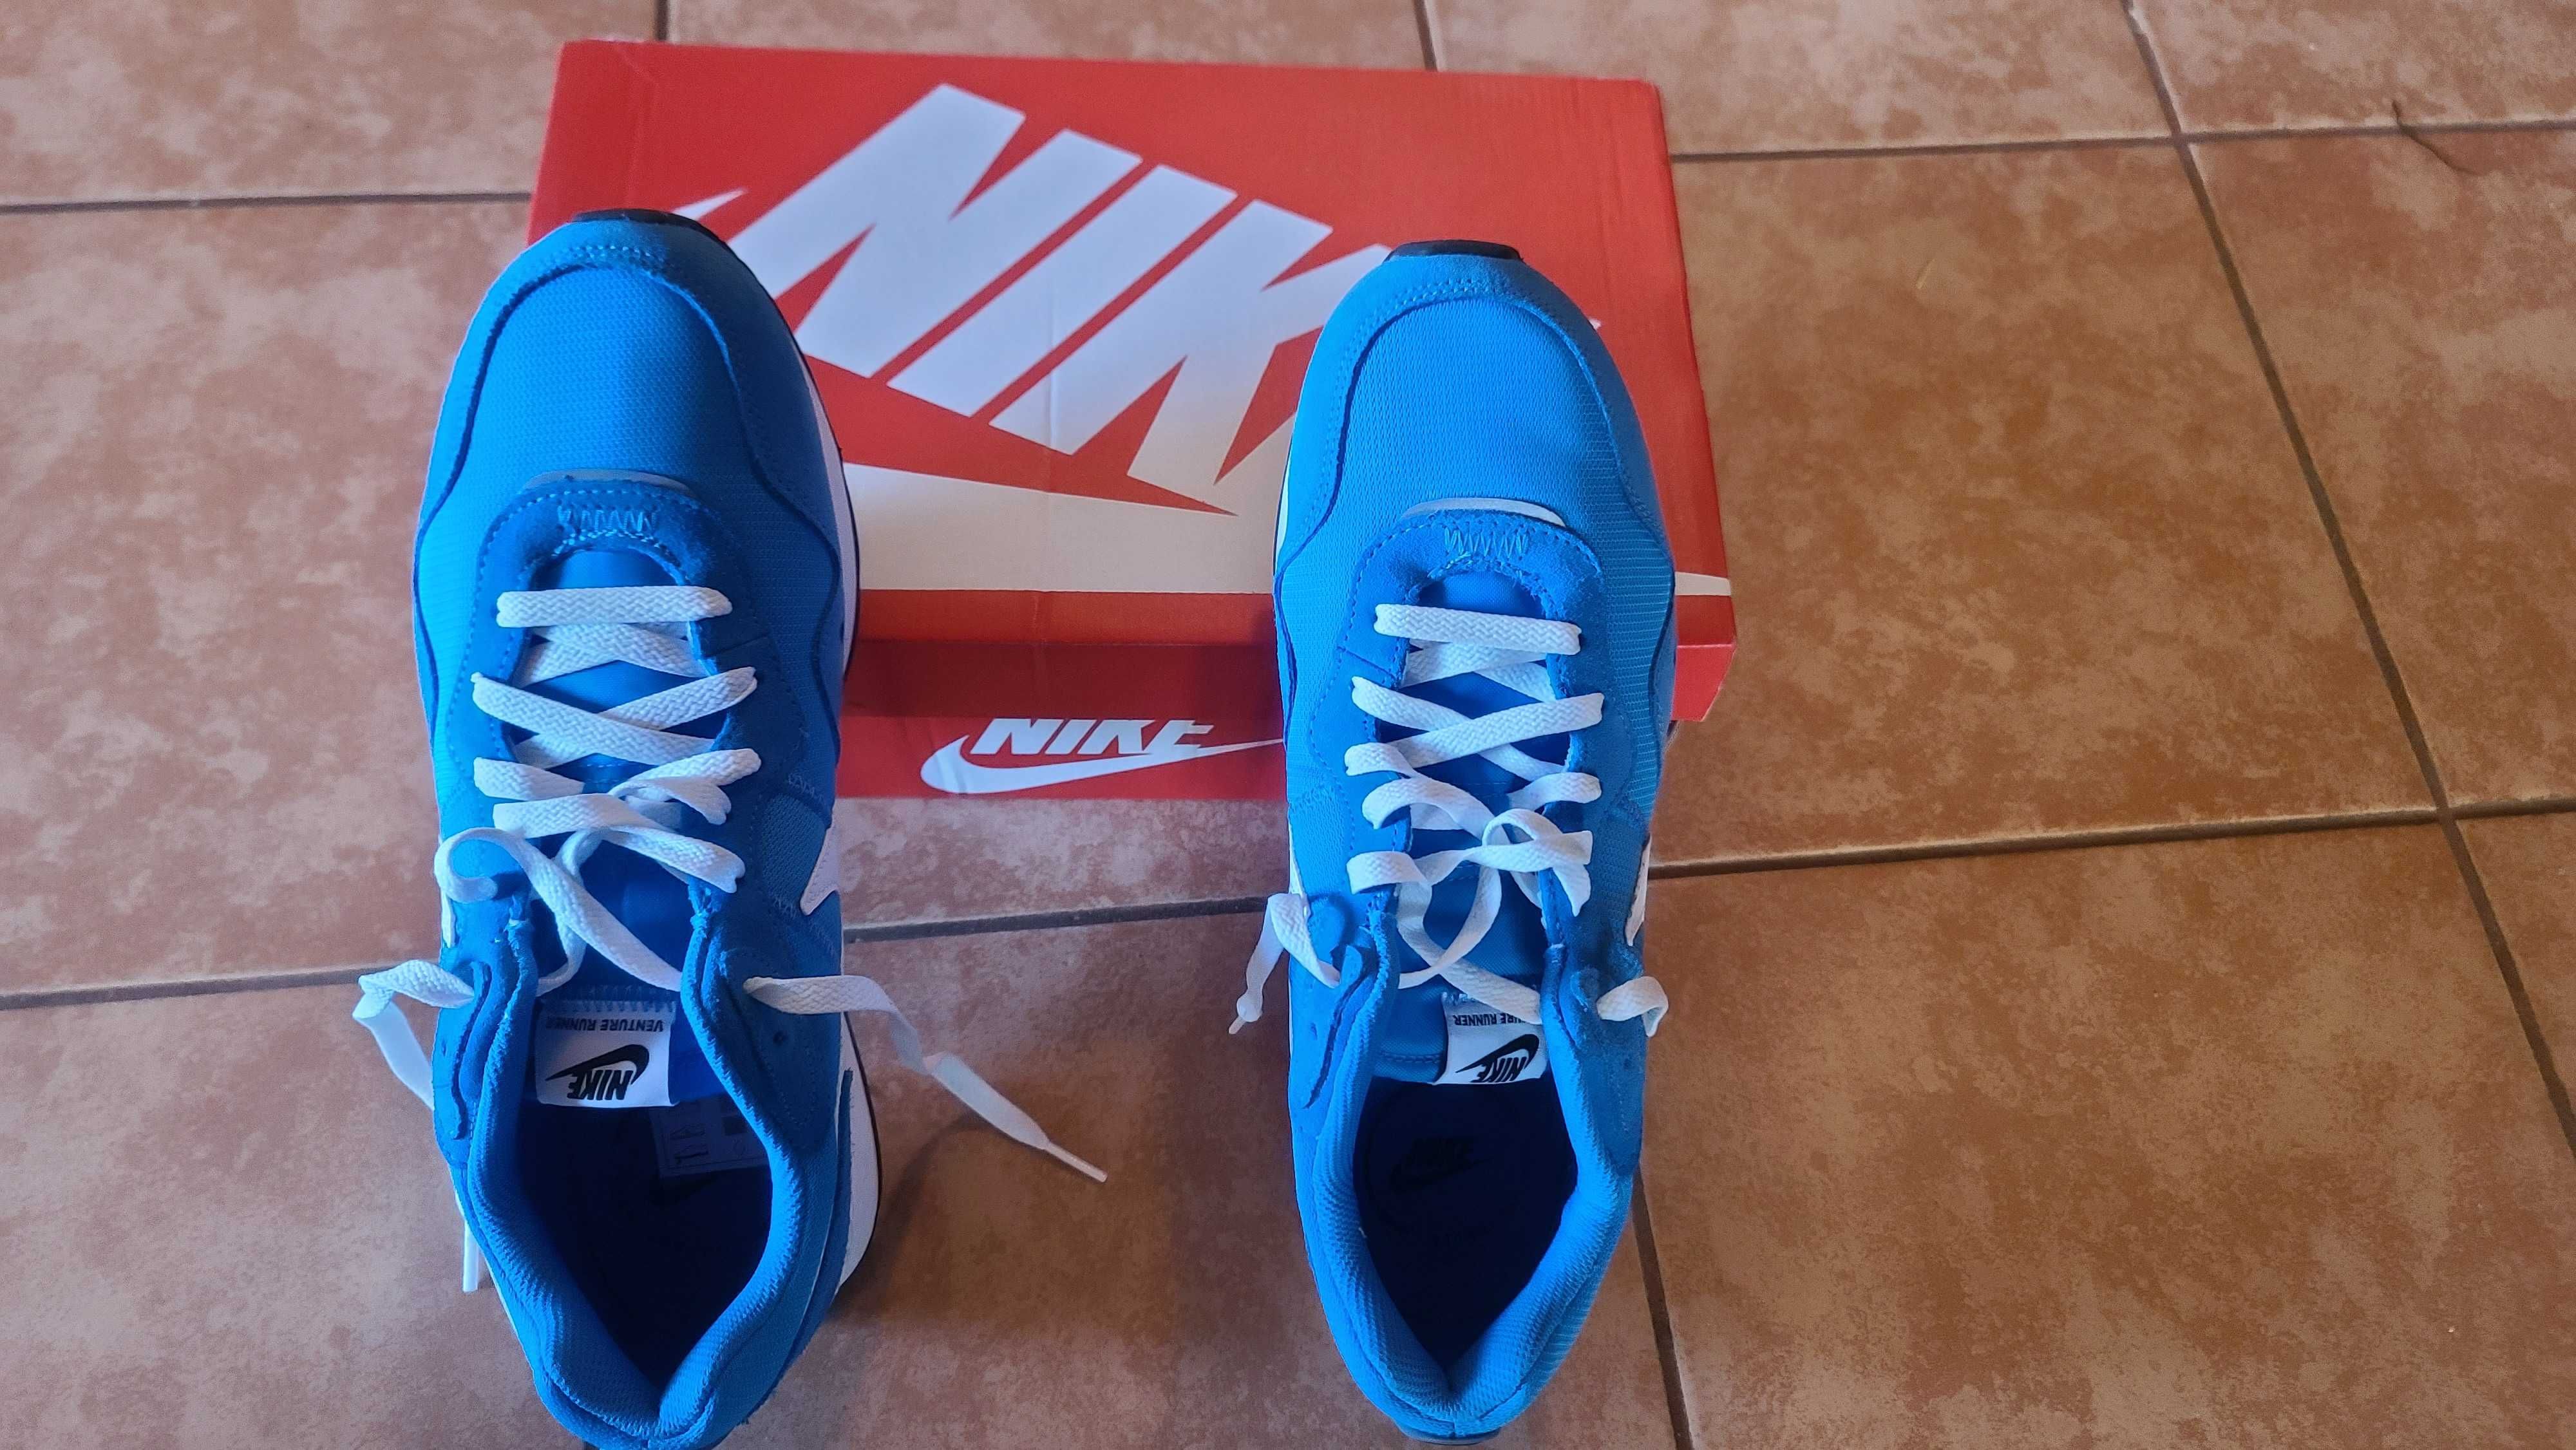 Кросівки чол. Nike (original) Venture Runner р.44,5 сині Індонезія